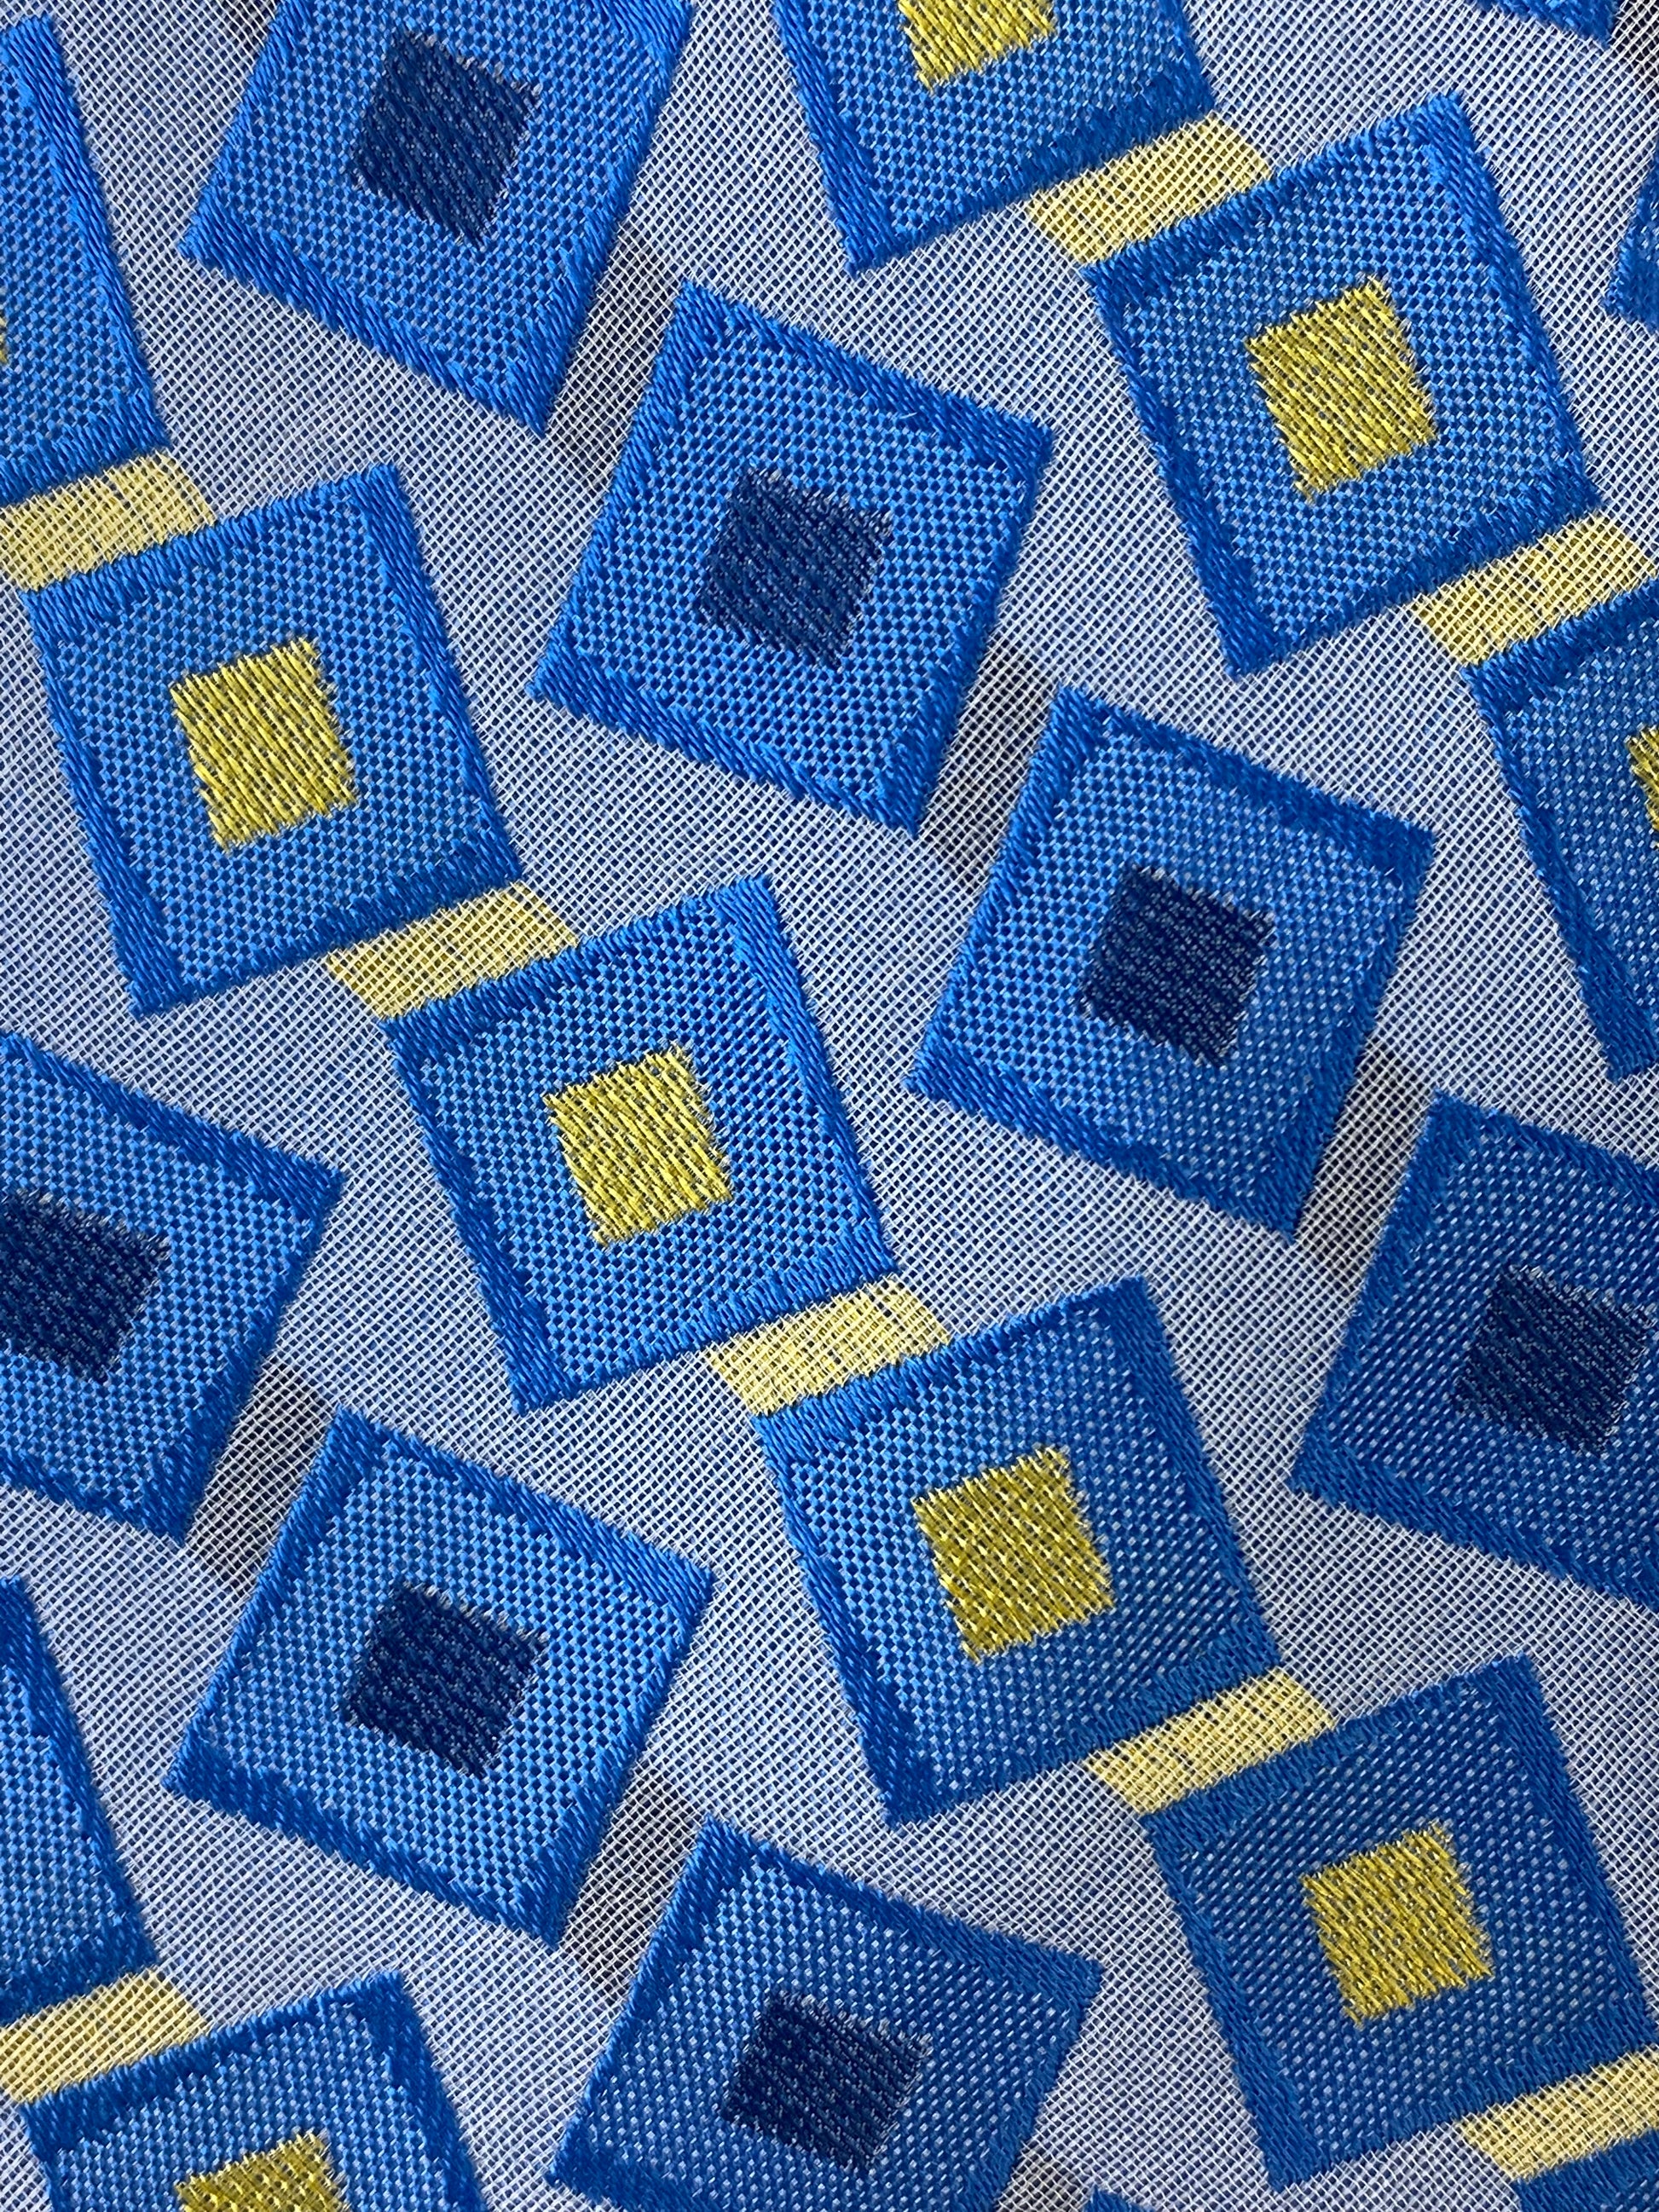 Close-up detail of: 90s Deadstock Silk Necktie, Men's Vintage Blue Yellow Geometric Pattern Tie, NOS